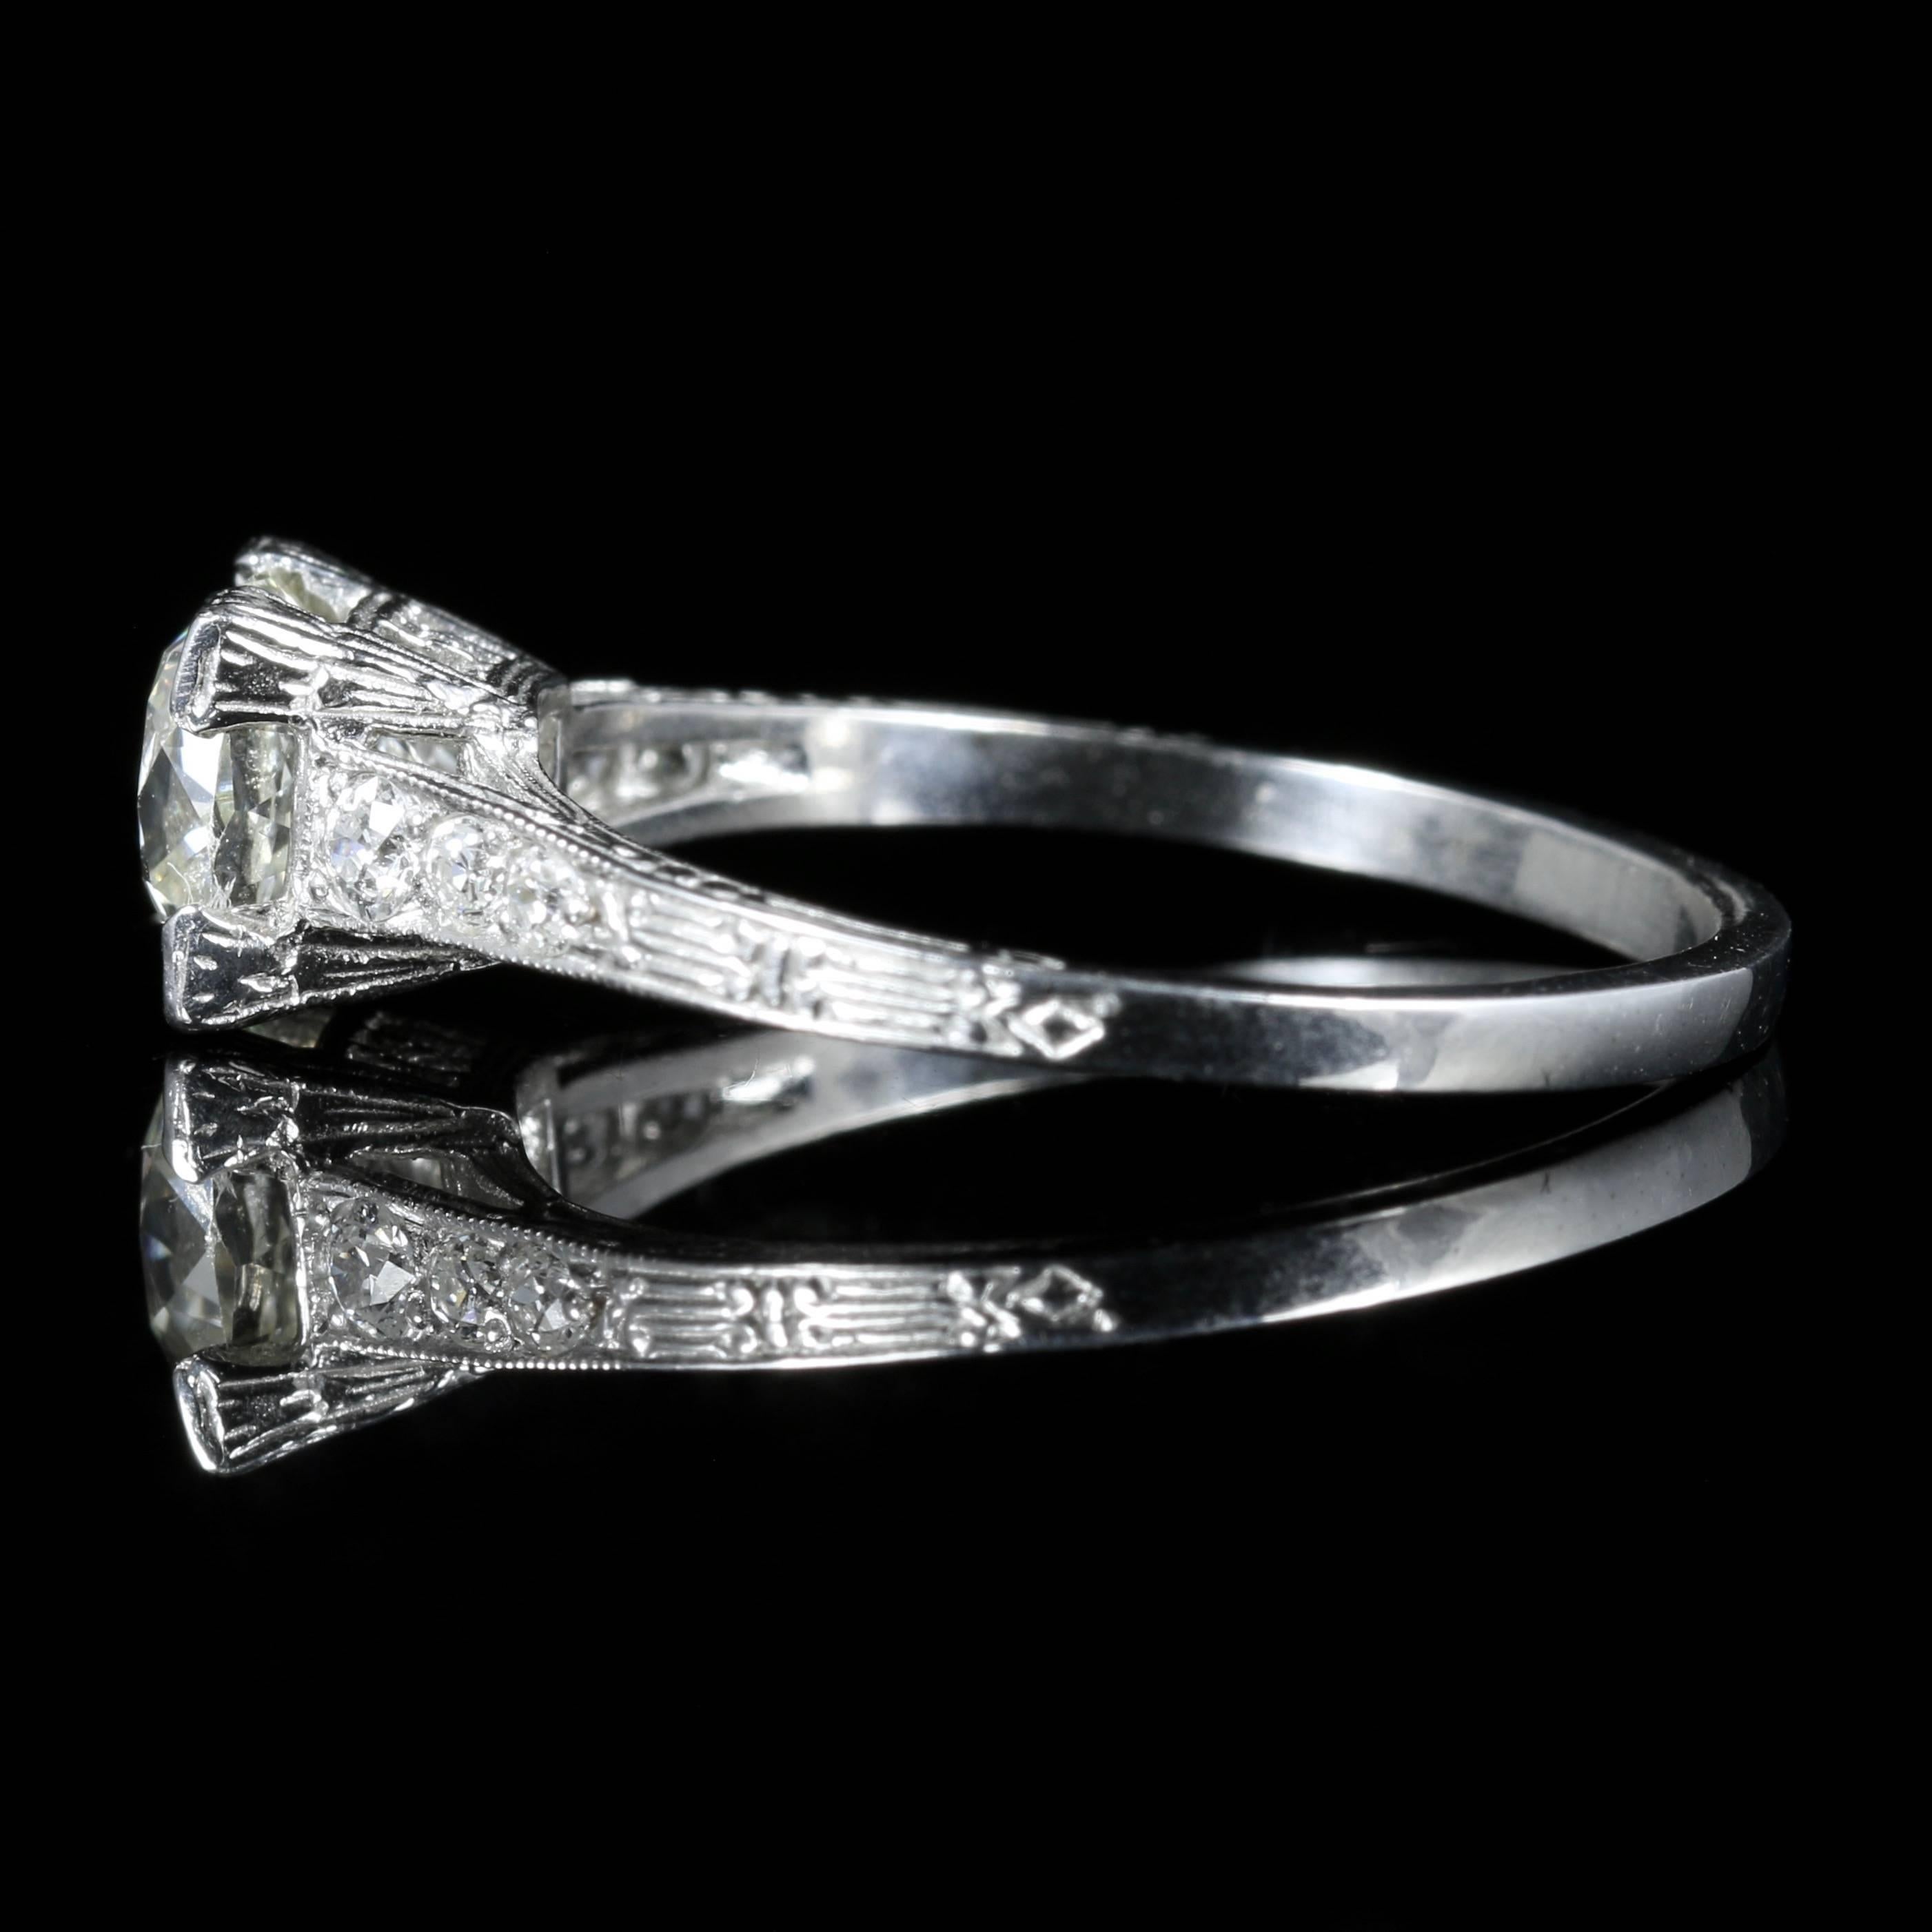 Antique Art Deco Diamond Engagement Ring Solitaire, circa 1920 For Sale 1